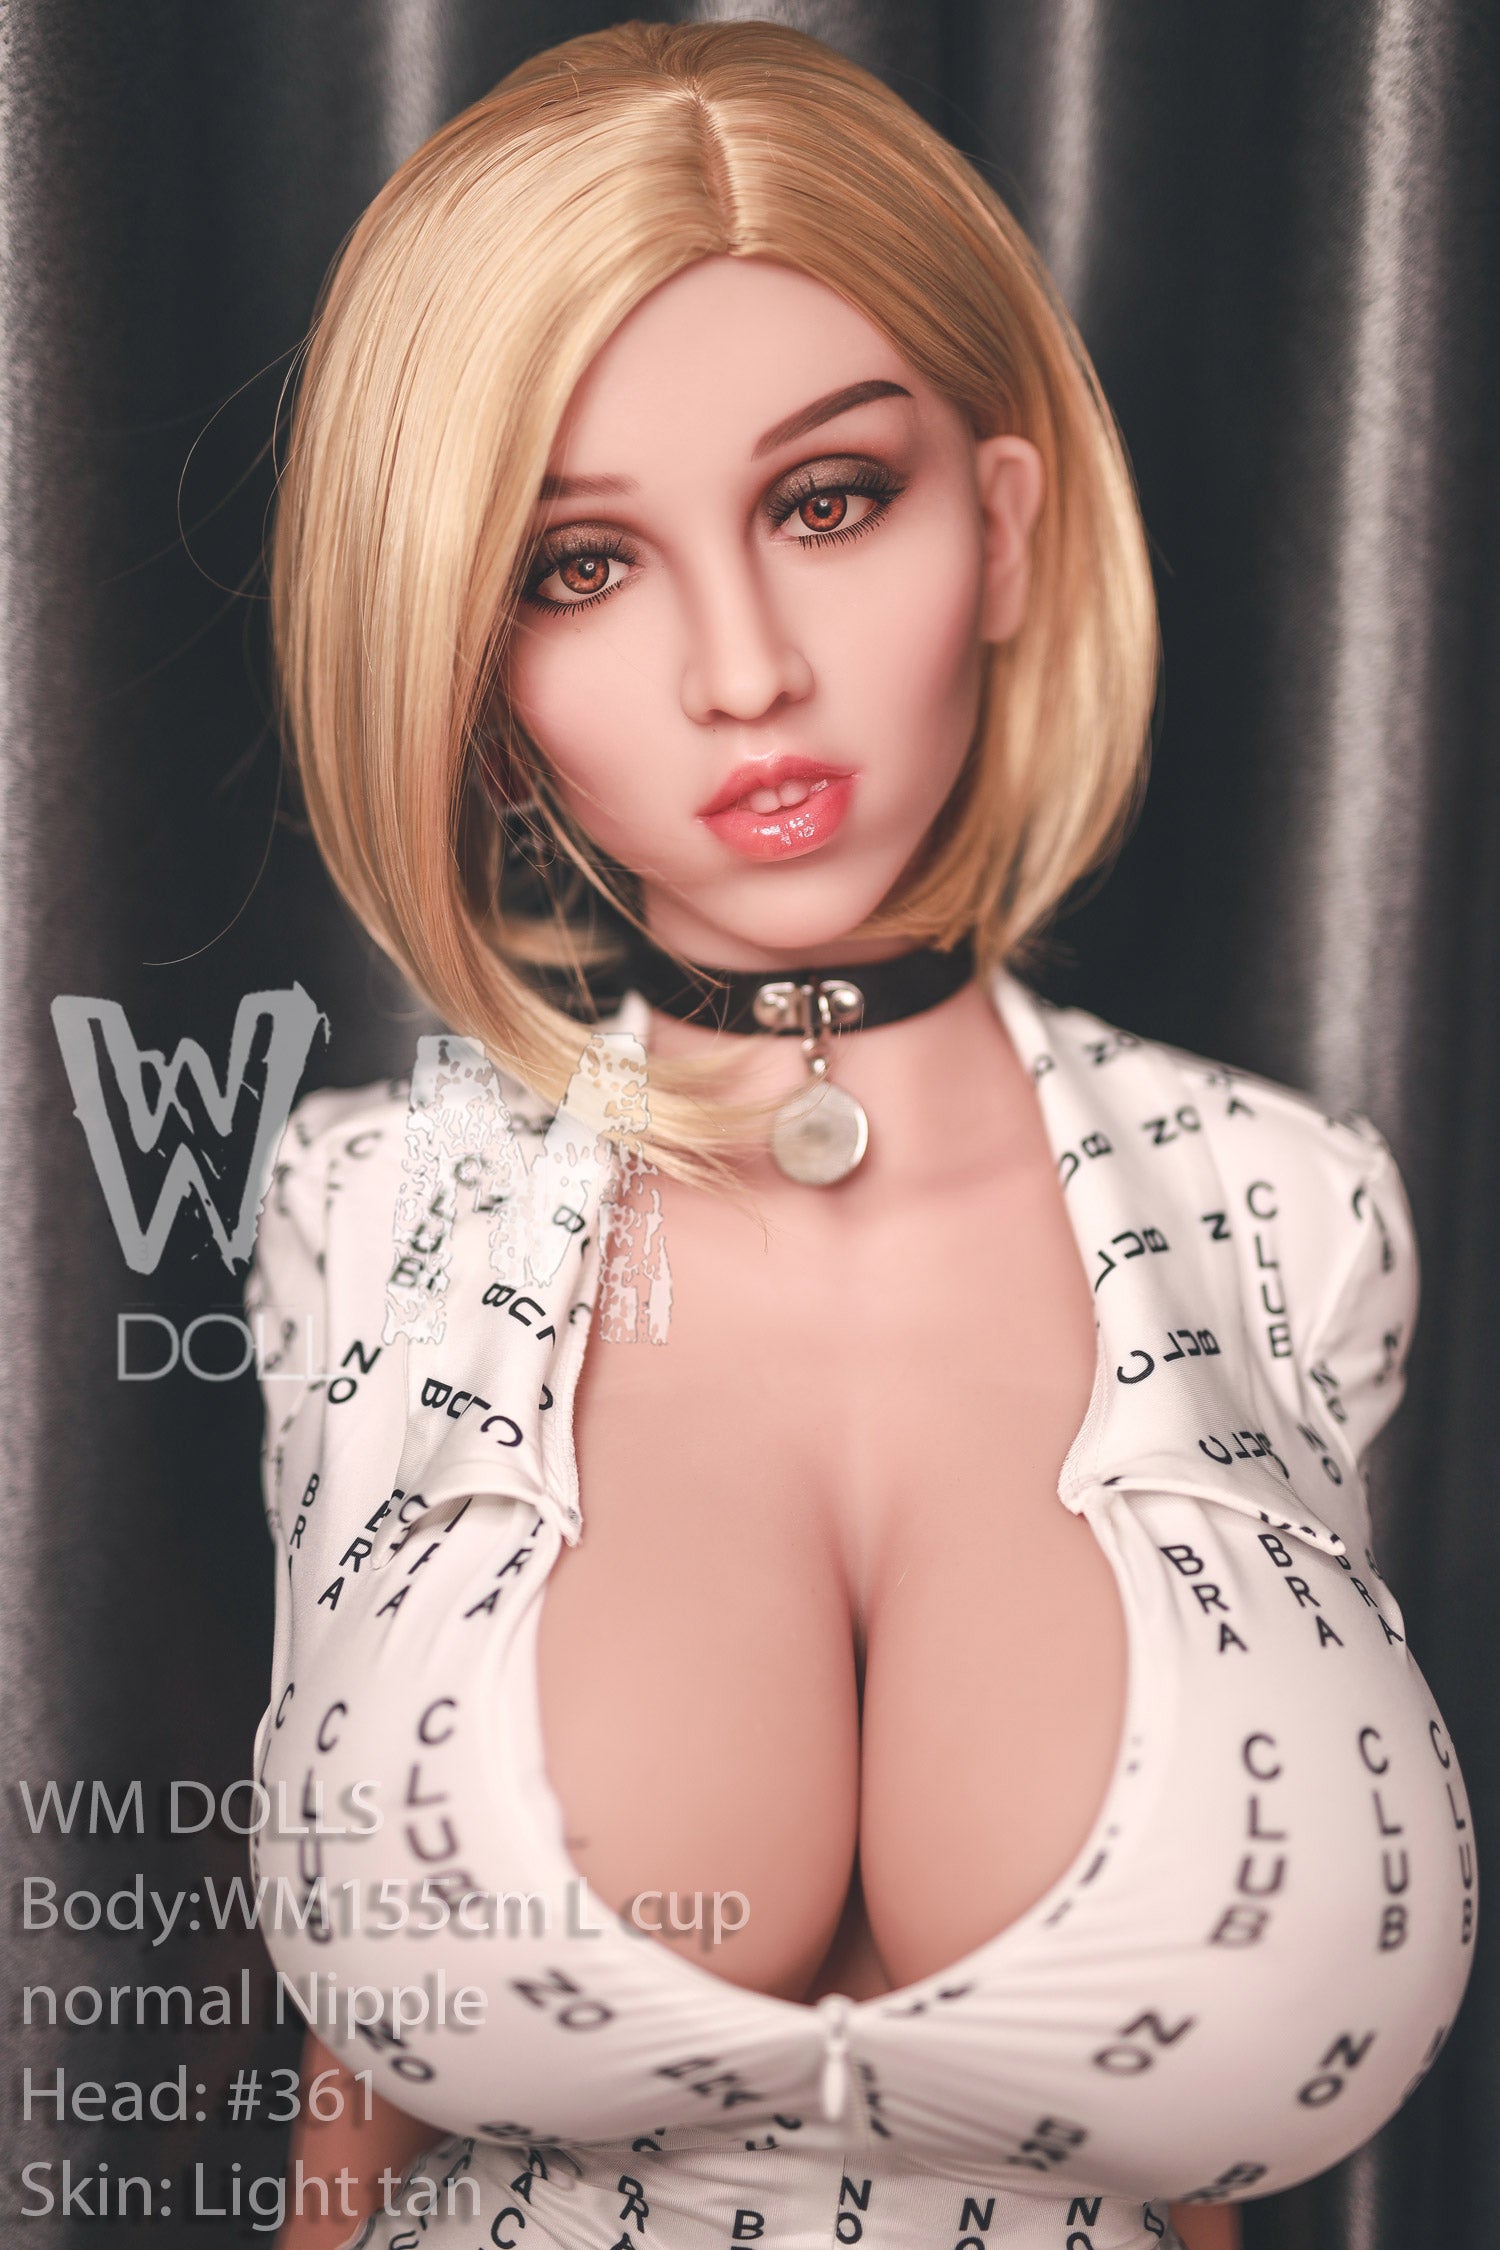 WM DOLL 155 CM L TPE - Olivia | Buy Sex Dolls at DOLLS ACTUALLY